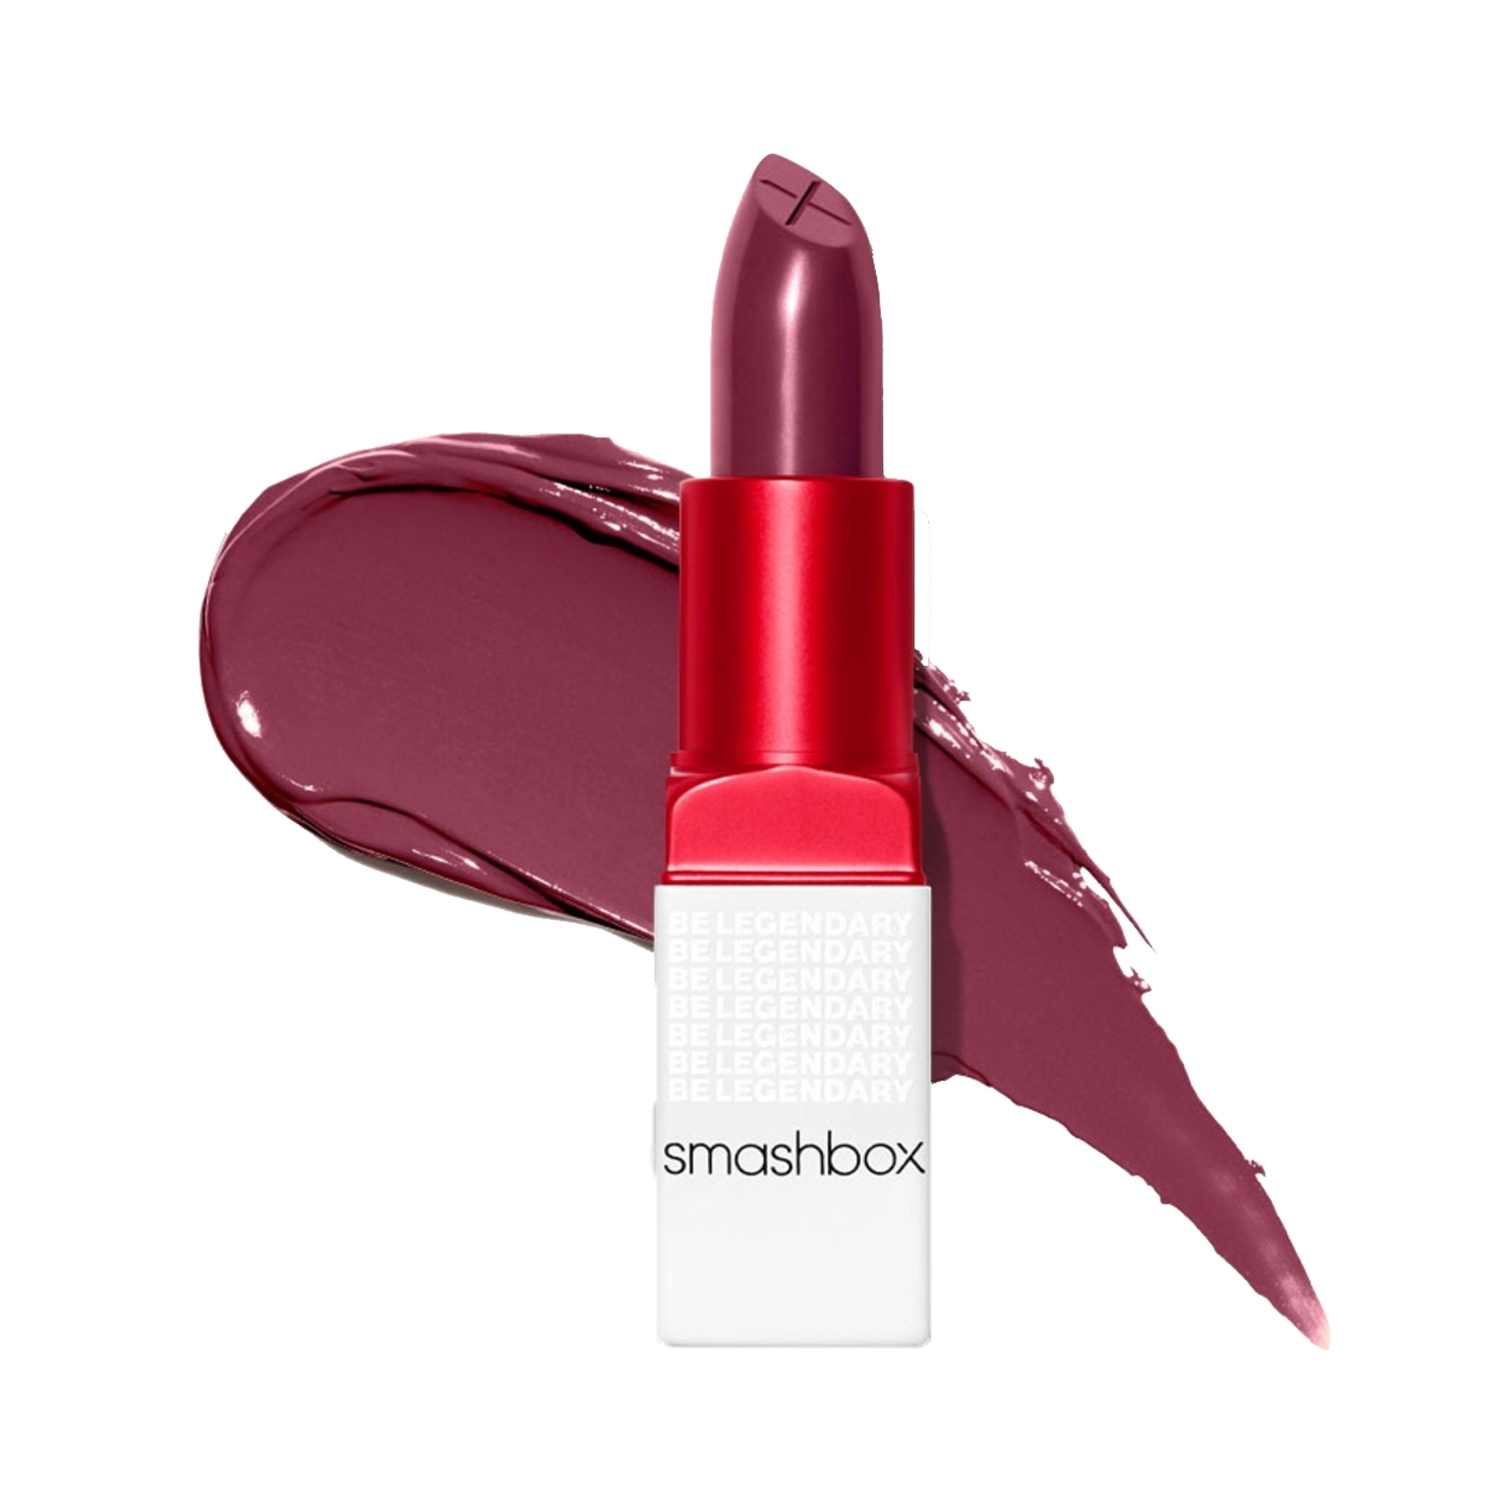 Smashbox | Smashbox Be Legendary Prime & Plush Lipstick - Cranberry (3.4g)